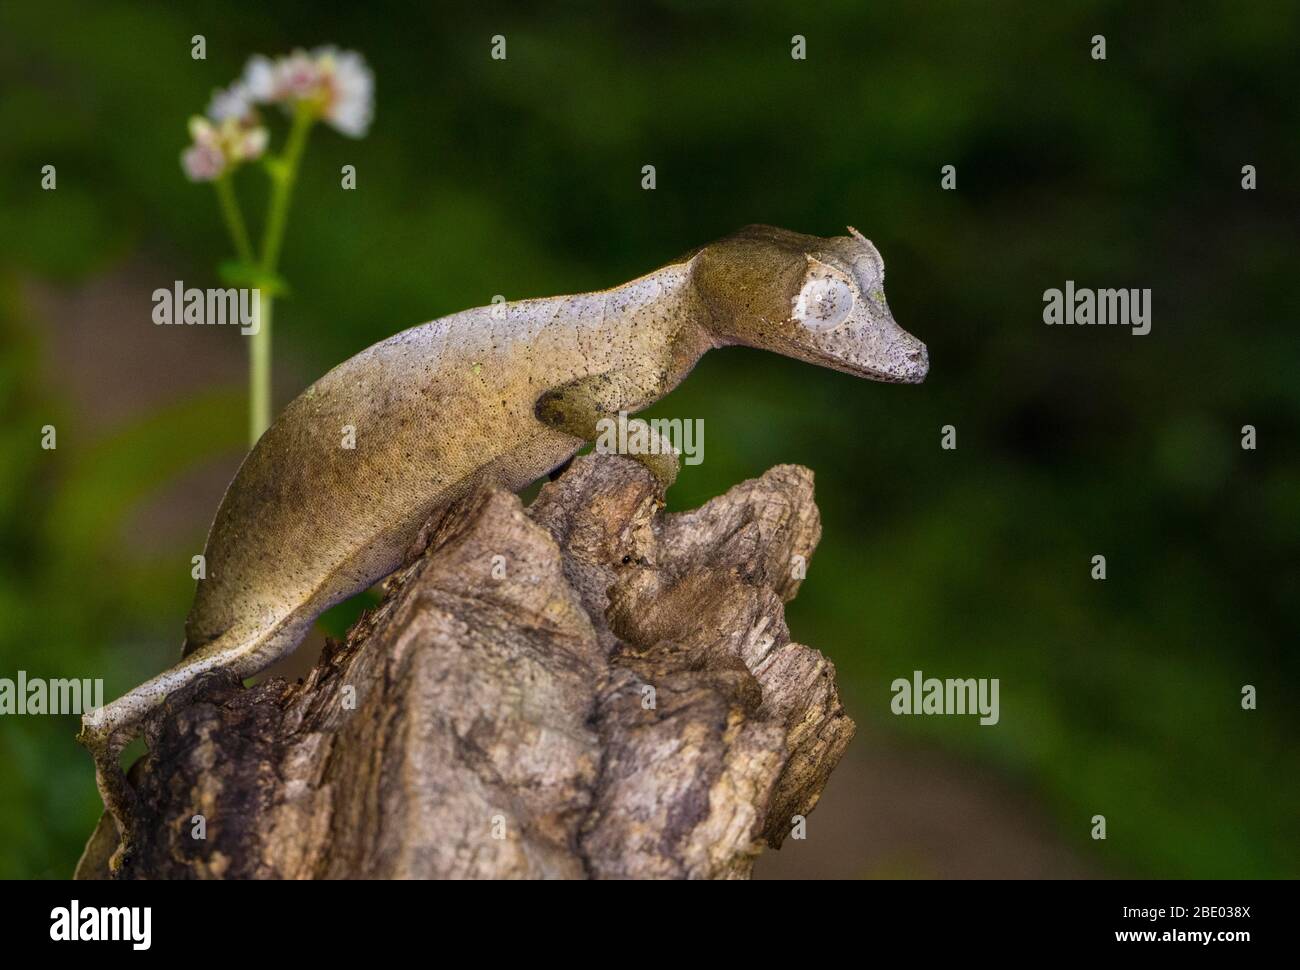 Close up of gecko camouflaged on tree stem, Madagascar Stock Photo